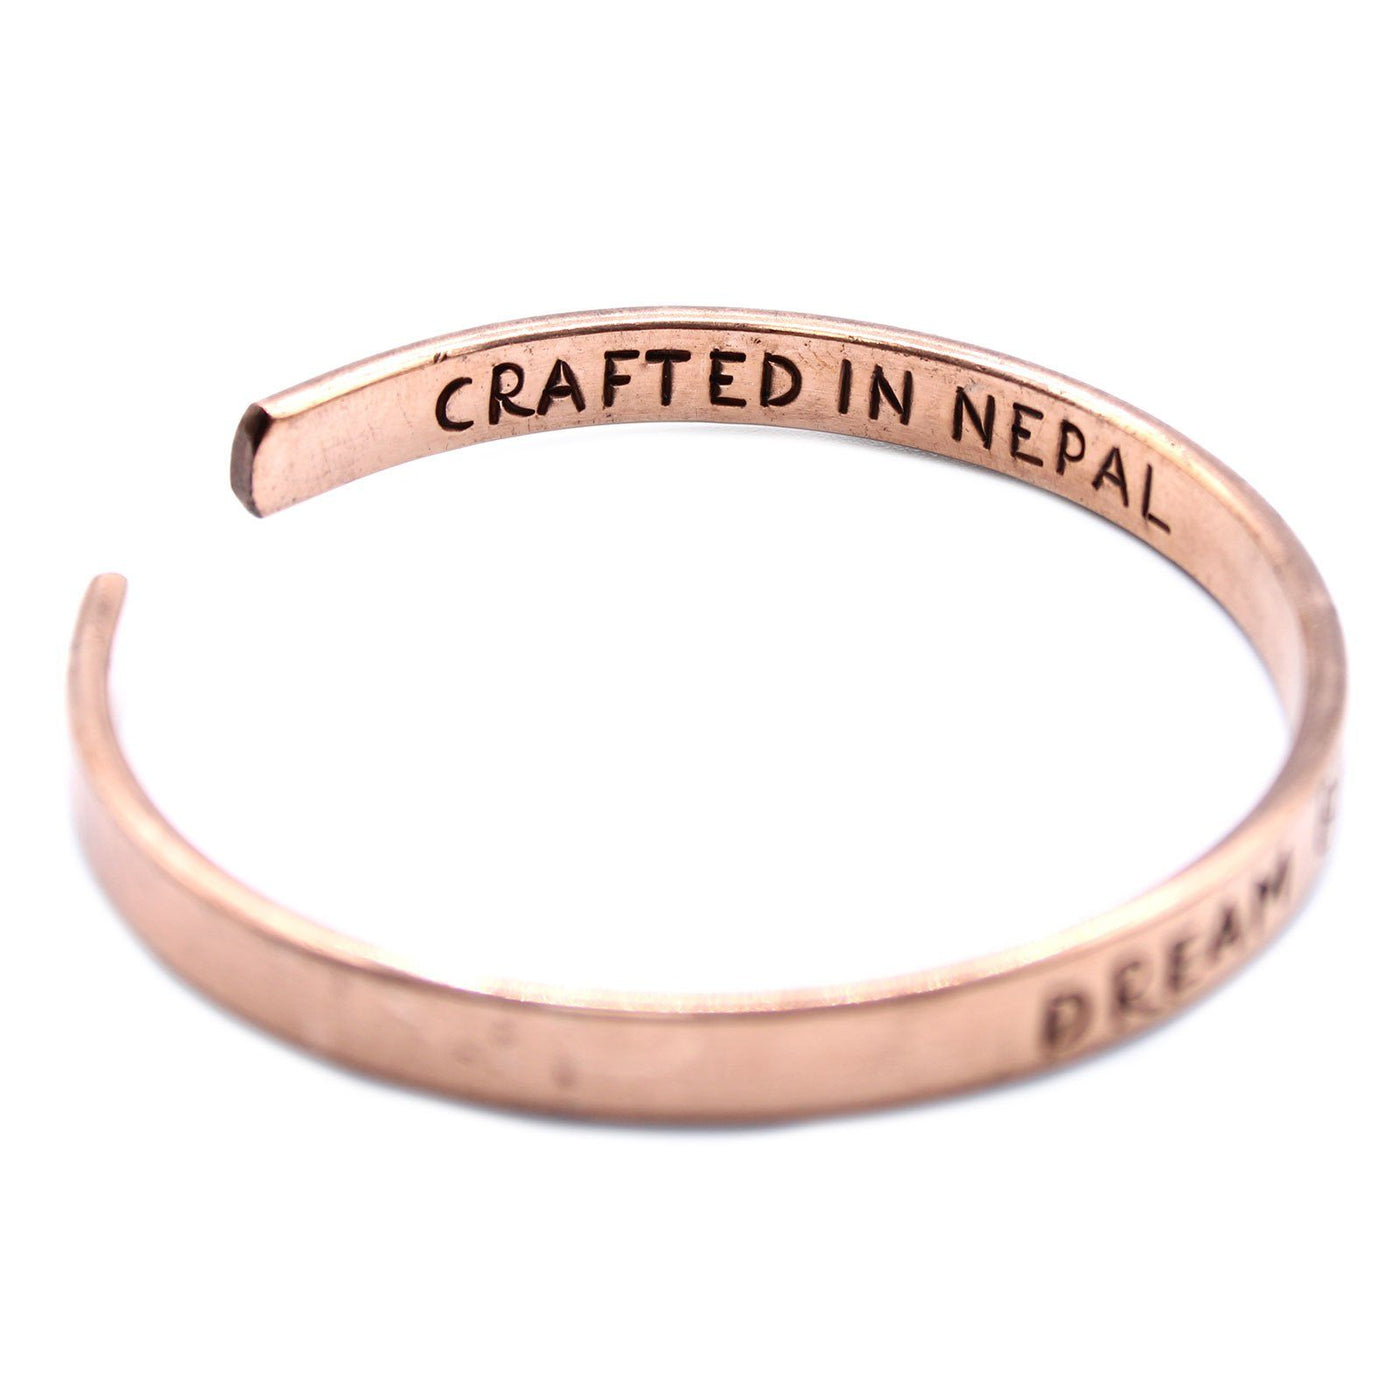 Handcrafted Nepal Yoga Inspiration Copper Unisex Bracelet.